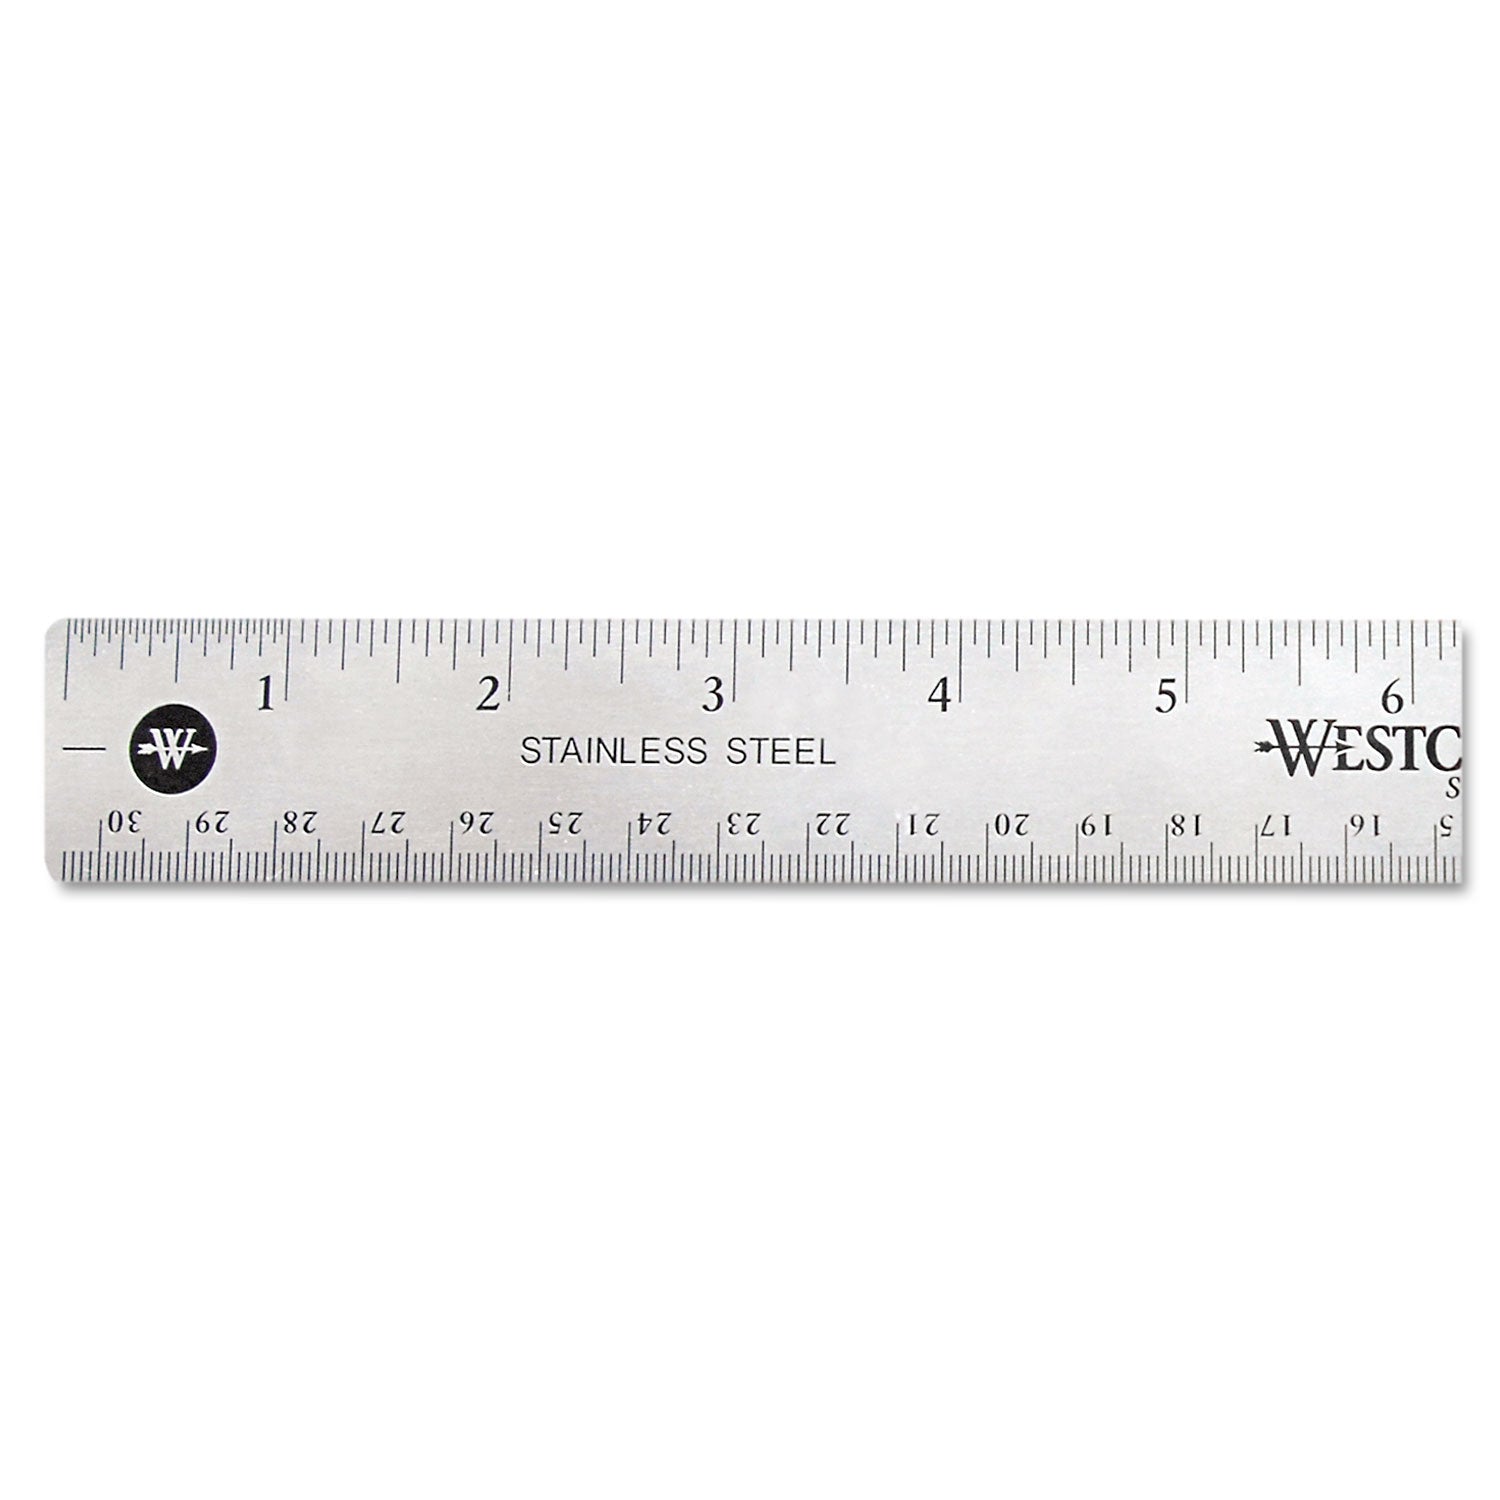 Stainless Steel Office Ruler With Non Slip Cork Base, Standard/Metric, 12" Long - 